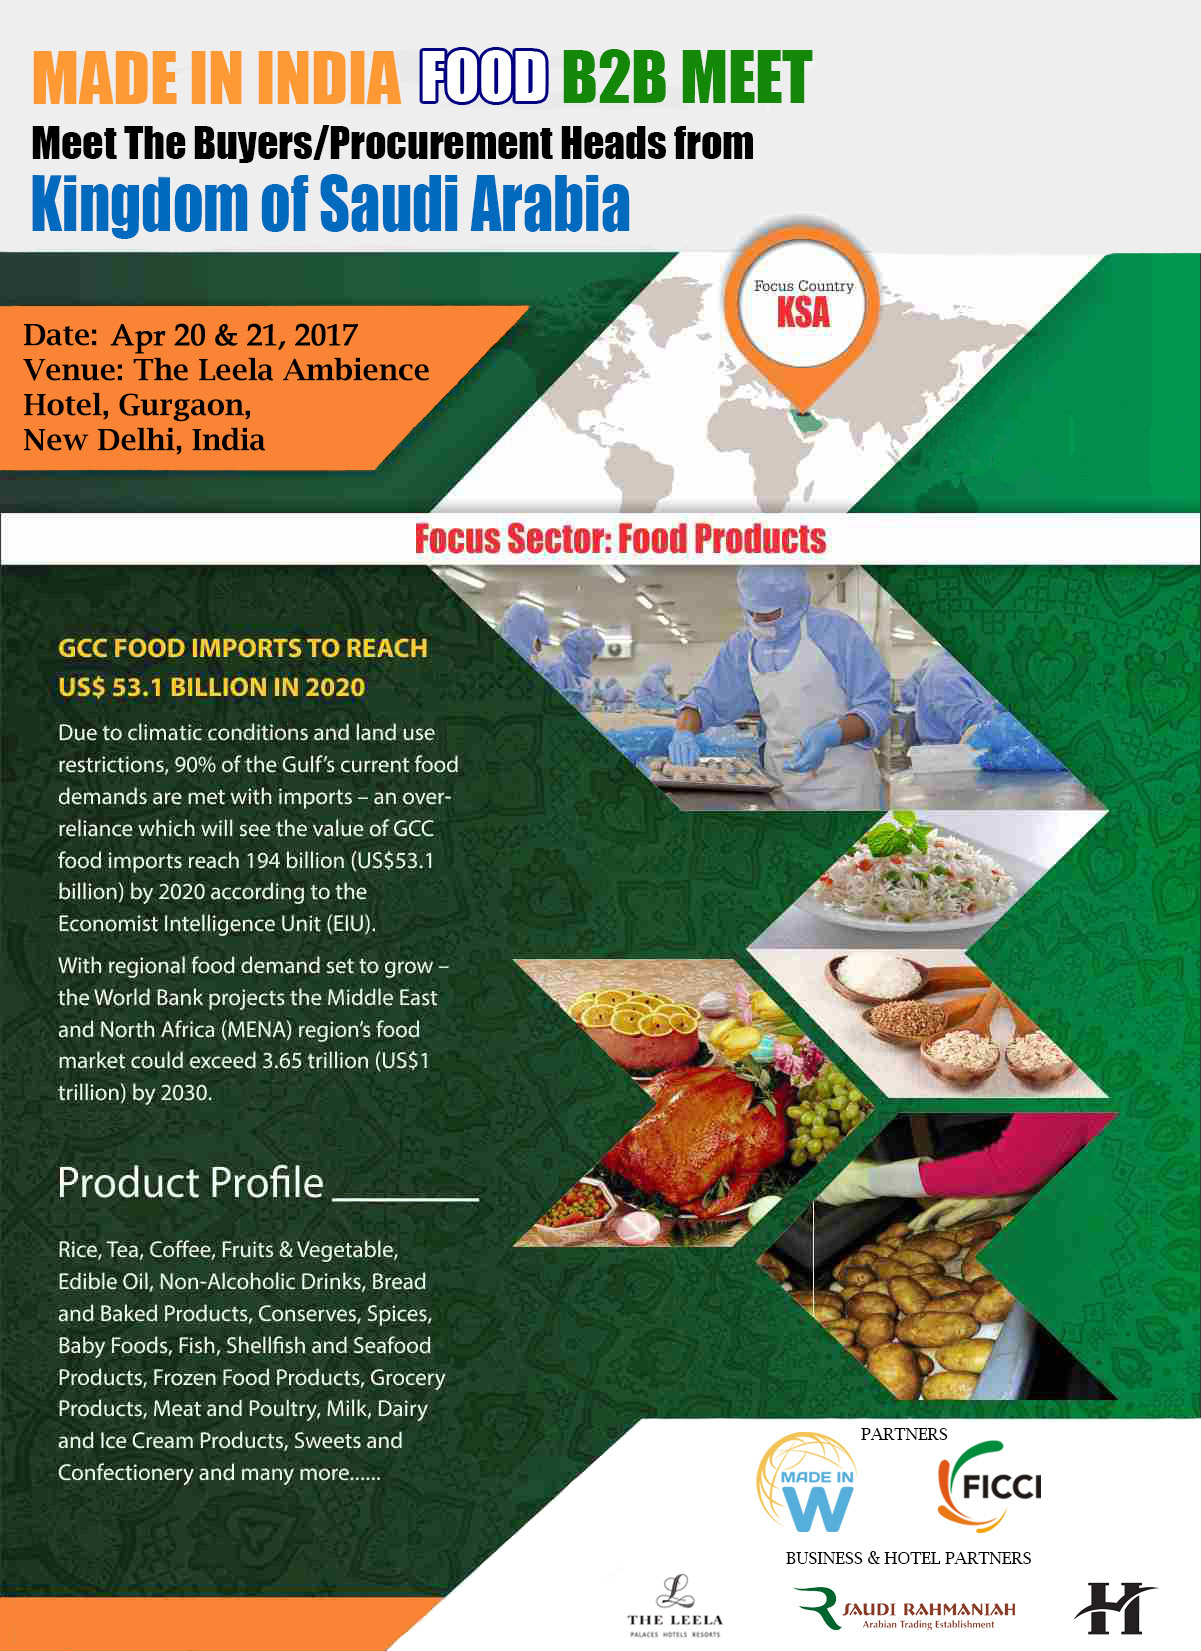 Food-B2B-Meet-Made-in-India-Flyer